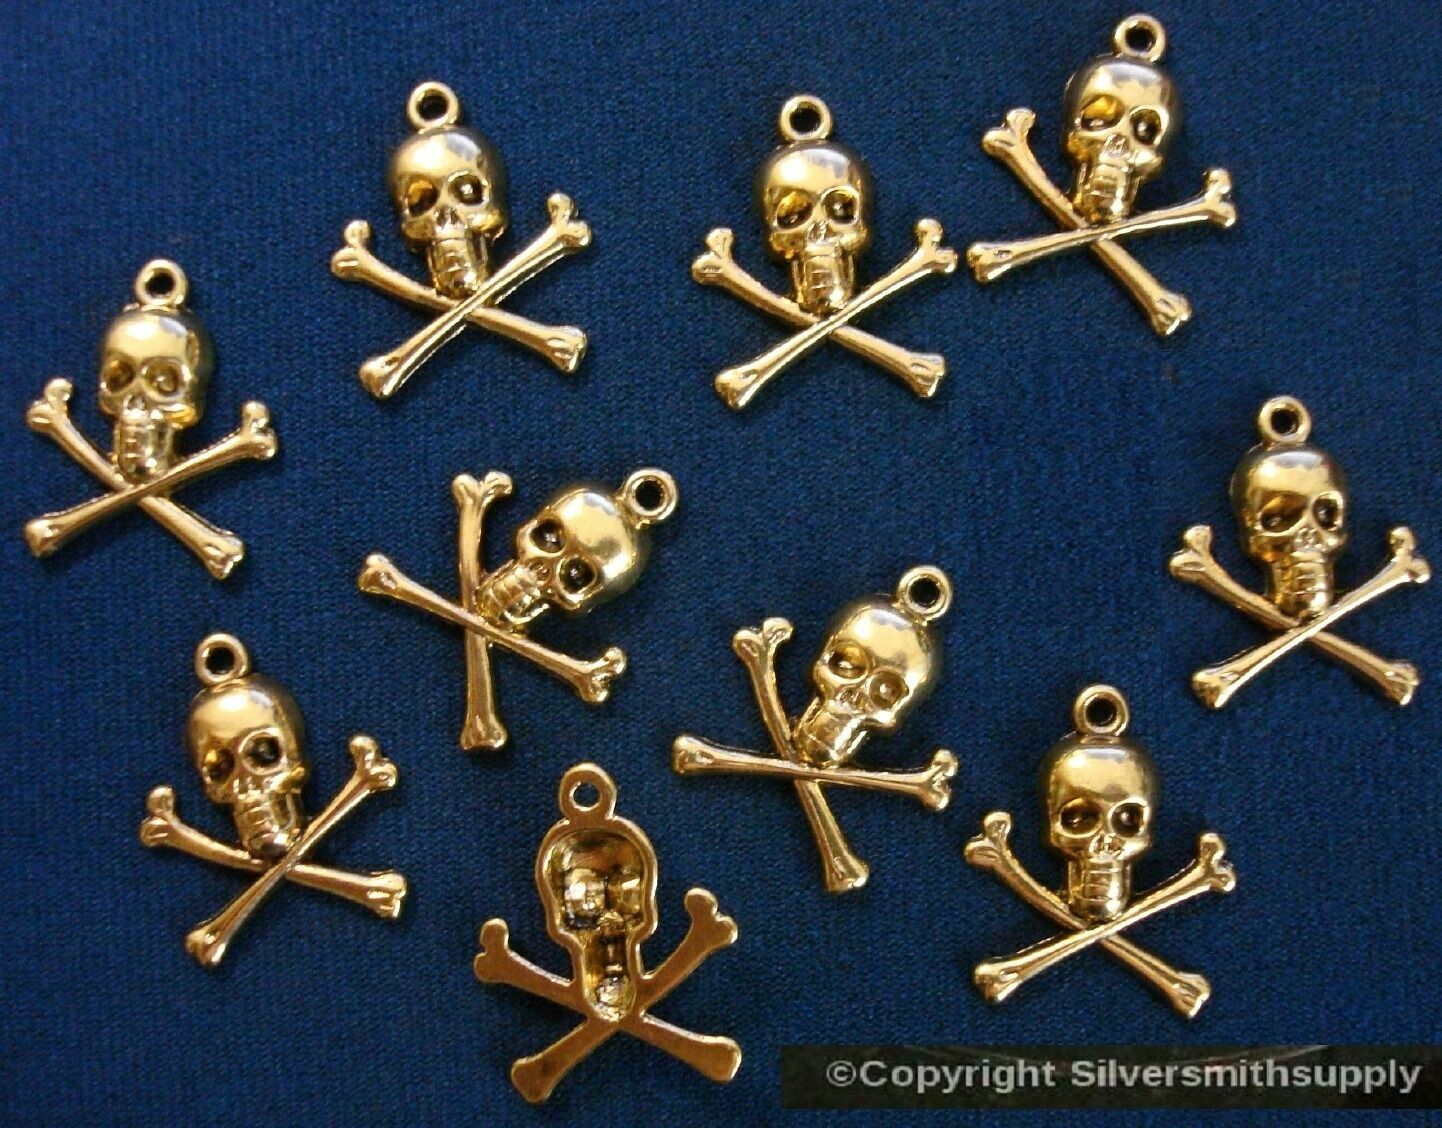 10 Golden skulls jewelry pendant charms ant gold plated skull findings CFP084 Silversmithsupply.com - фотография #3